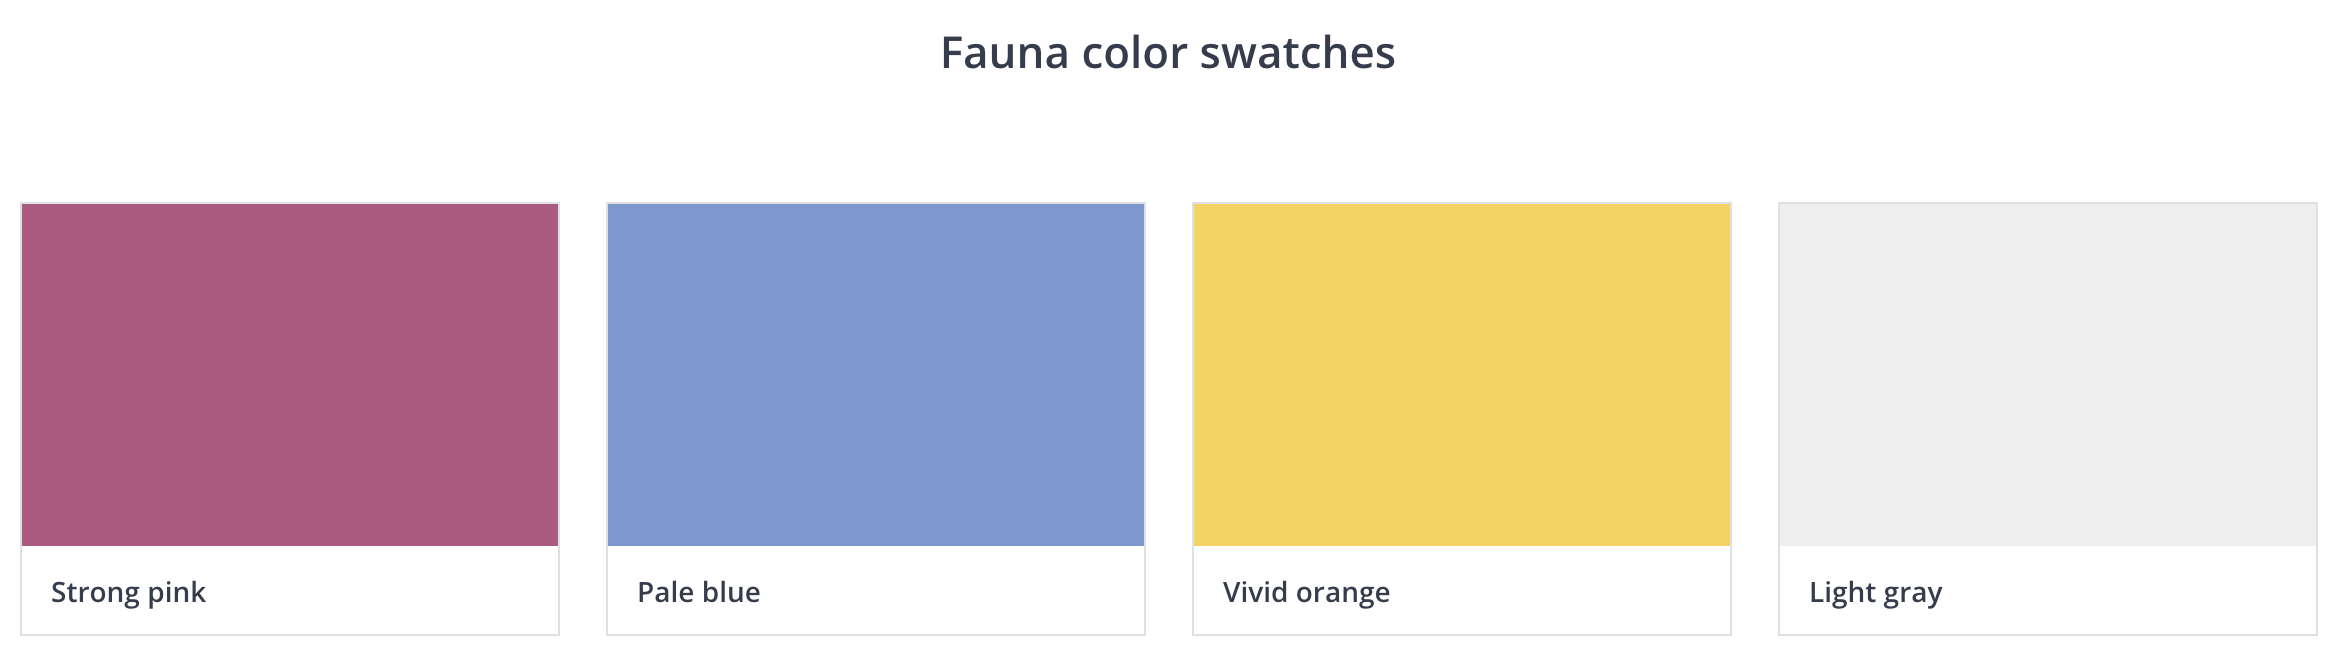 Fauna colour swatches